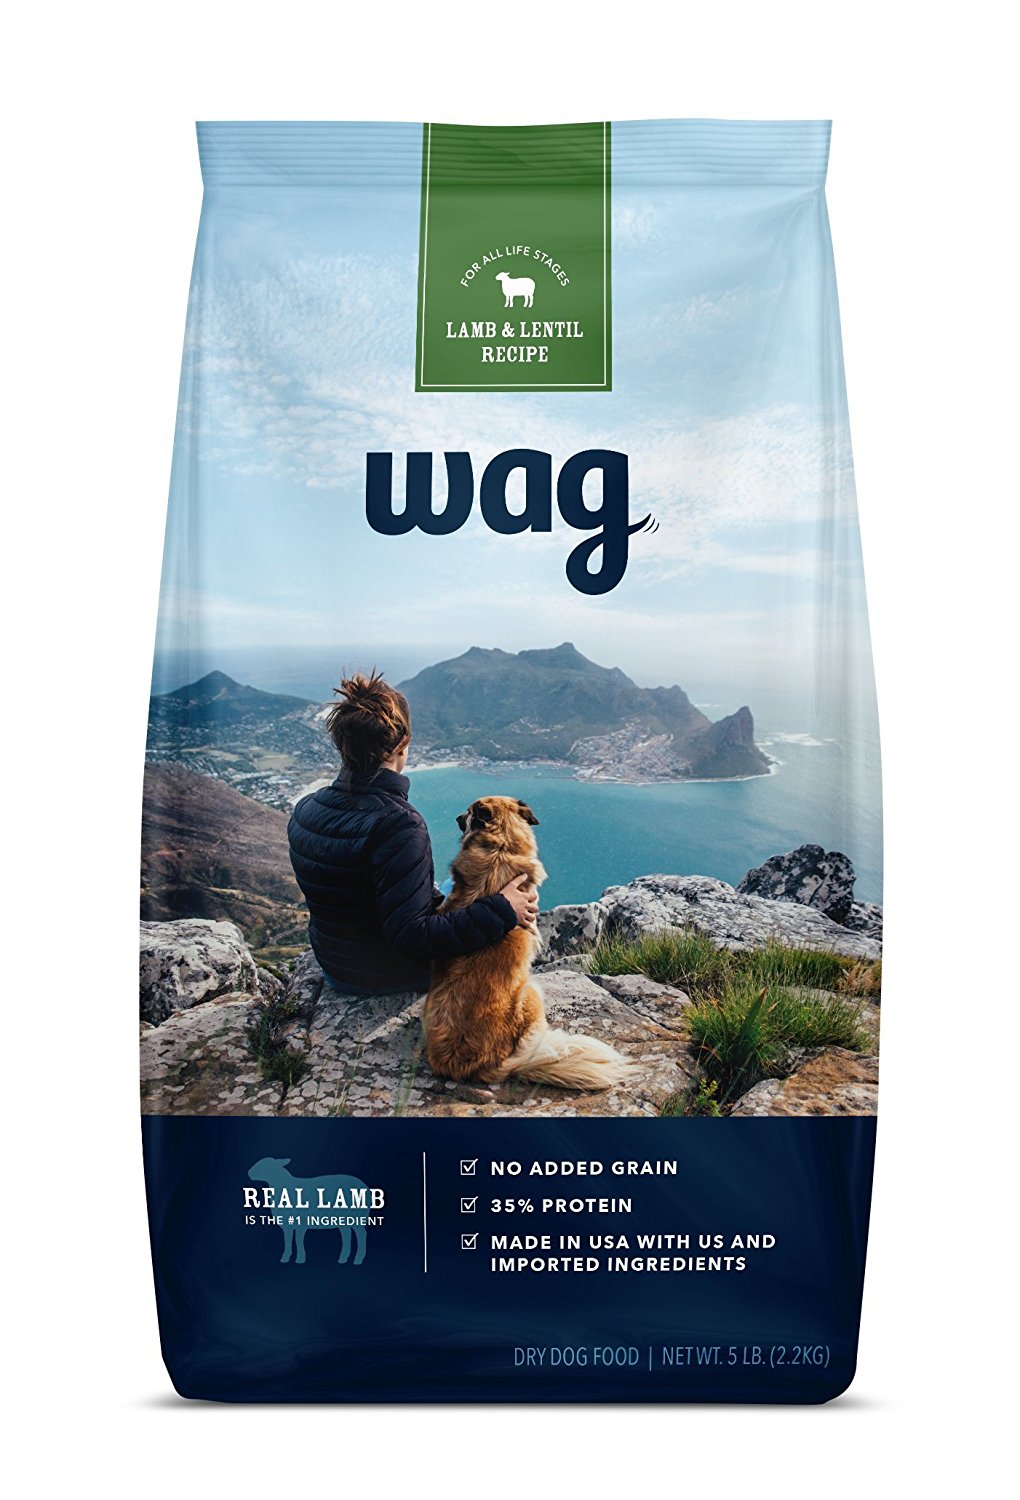 Wag Amazon Brand Dog Food Only $7.40!